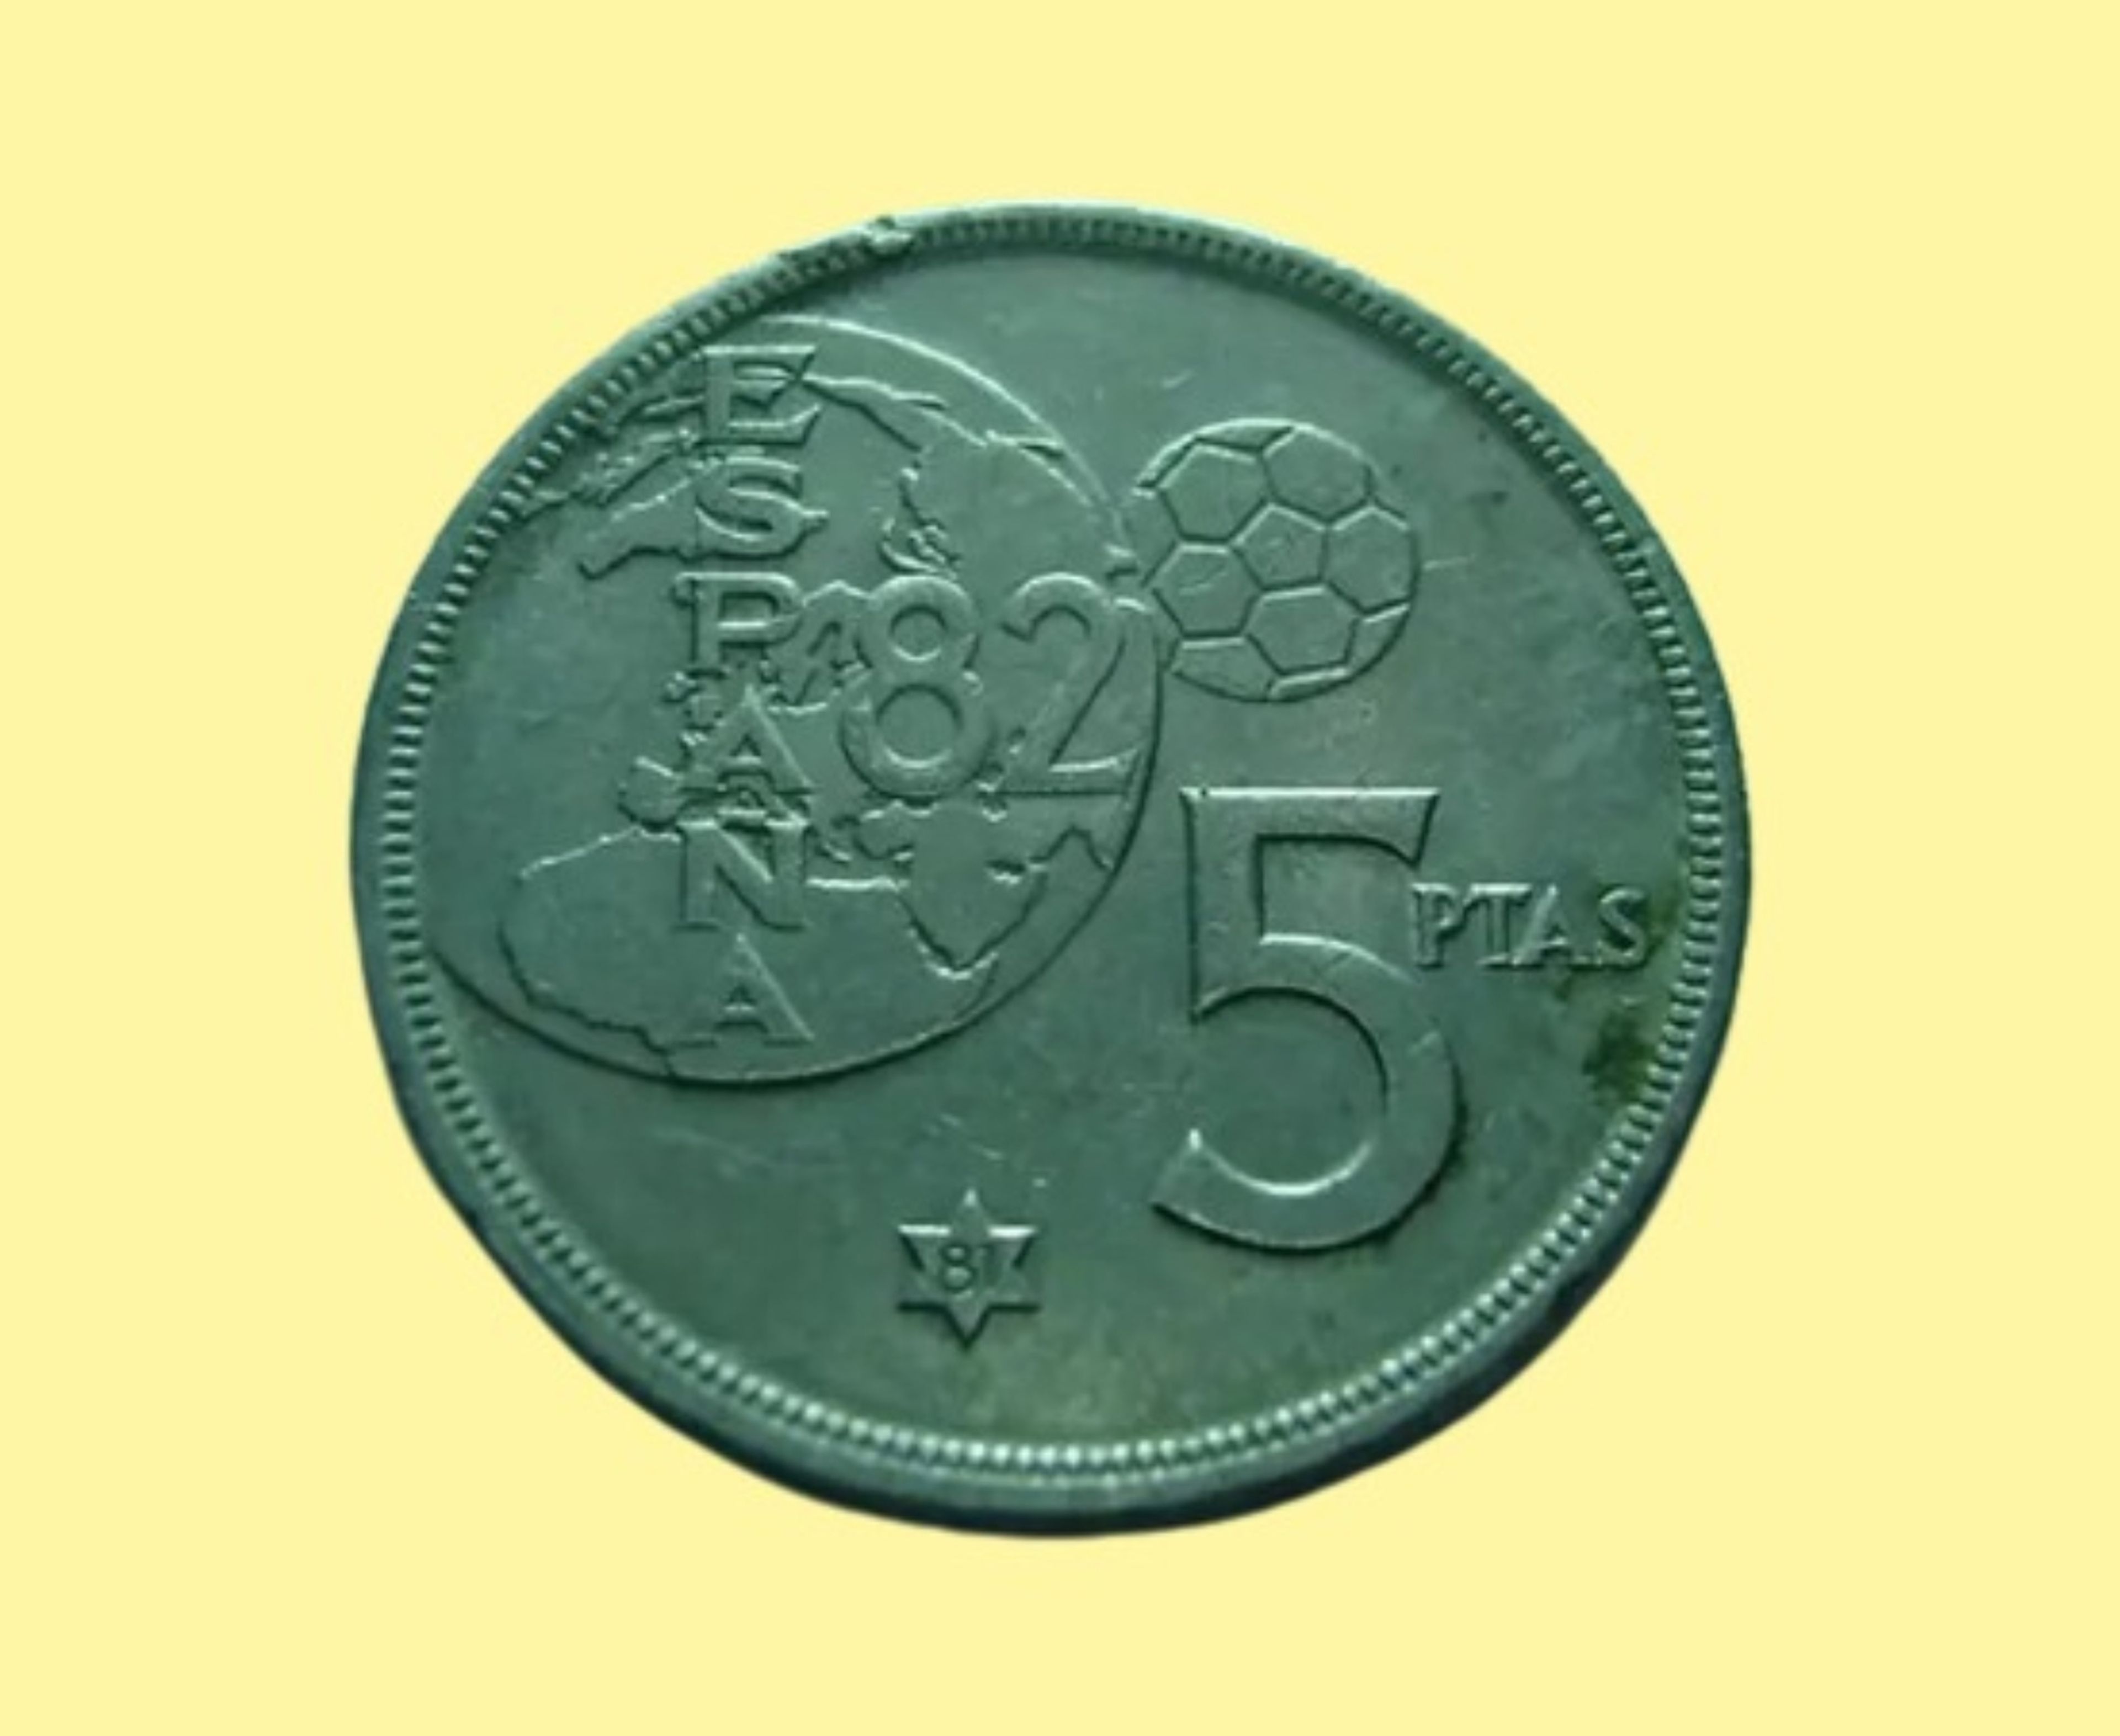 5 pesetas de 1975